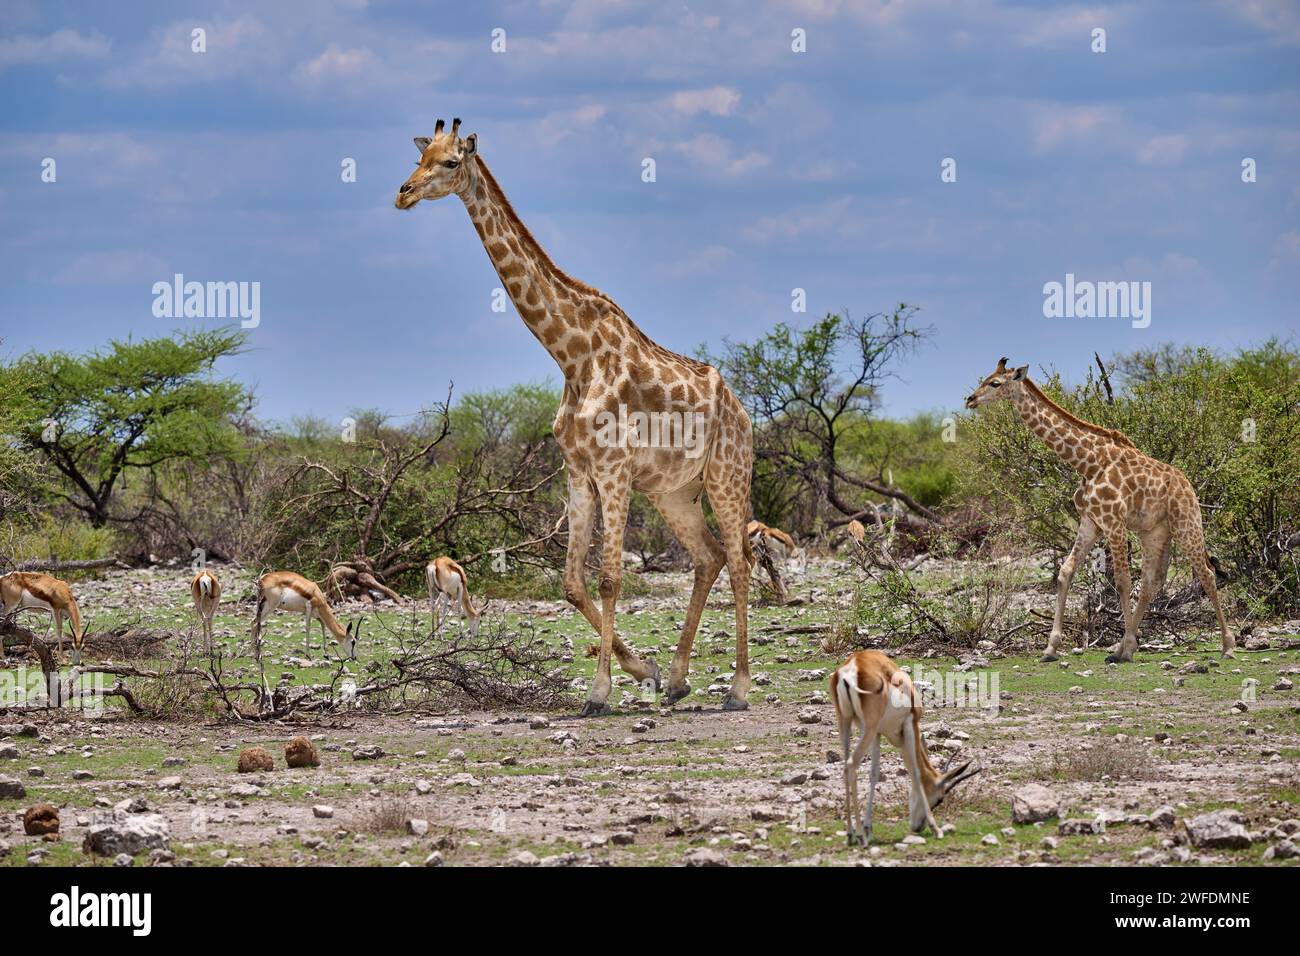 Girafe angolaise ou girafe namibienne ou girafe fumée (Giraffa camelopardalis angolensis) mère avec jeune enfant, Parc national d'Etosha, Namibie, Afrique Banque D'Images